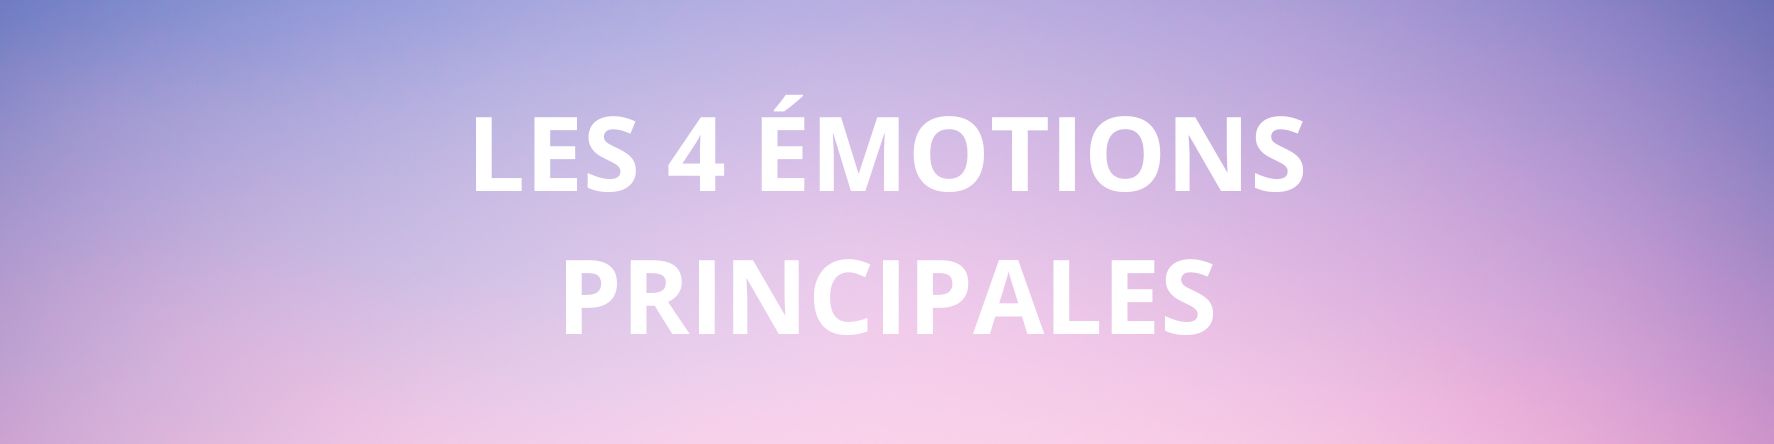 Les 4 émotions principales